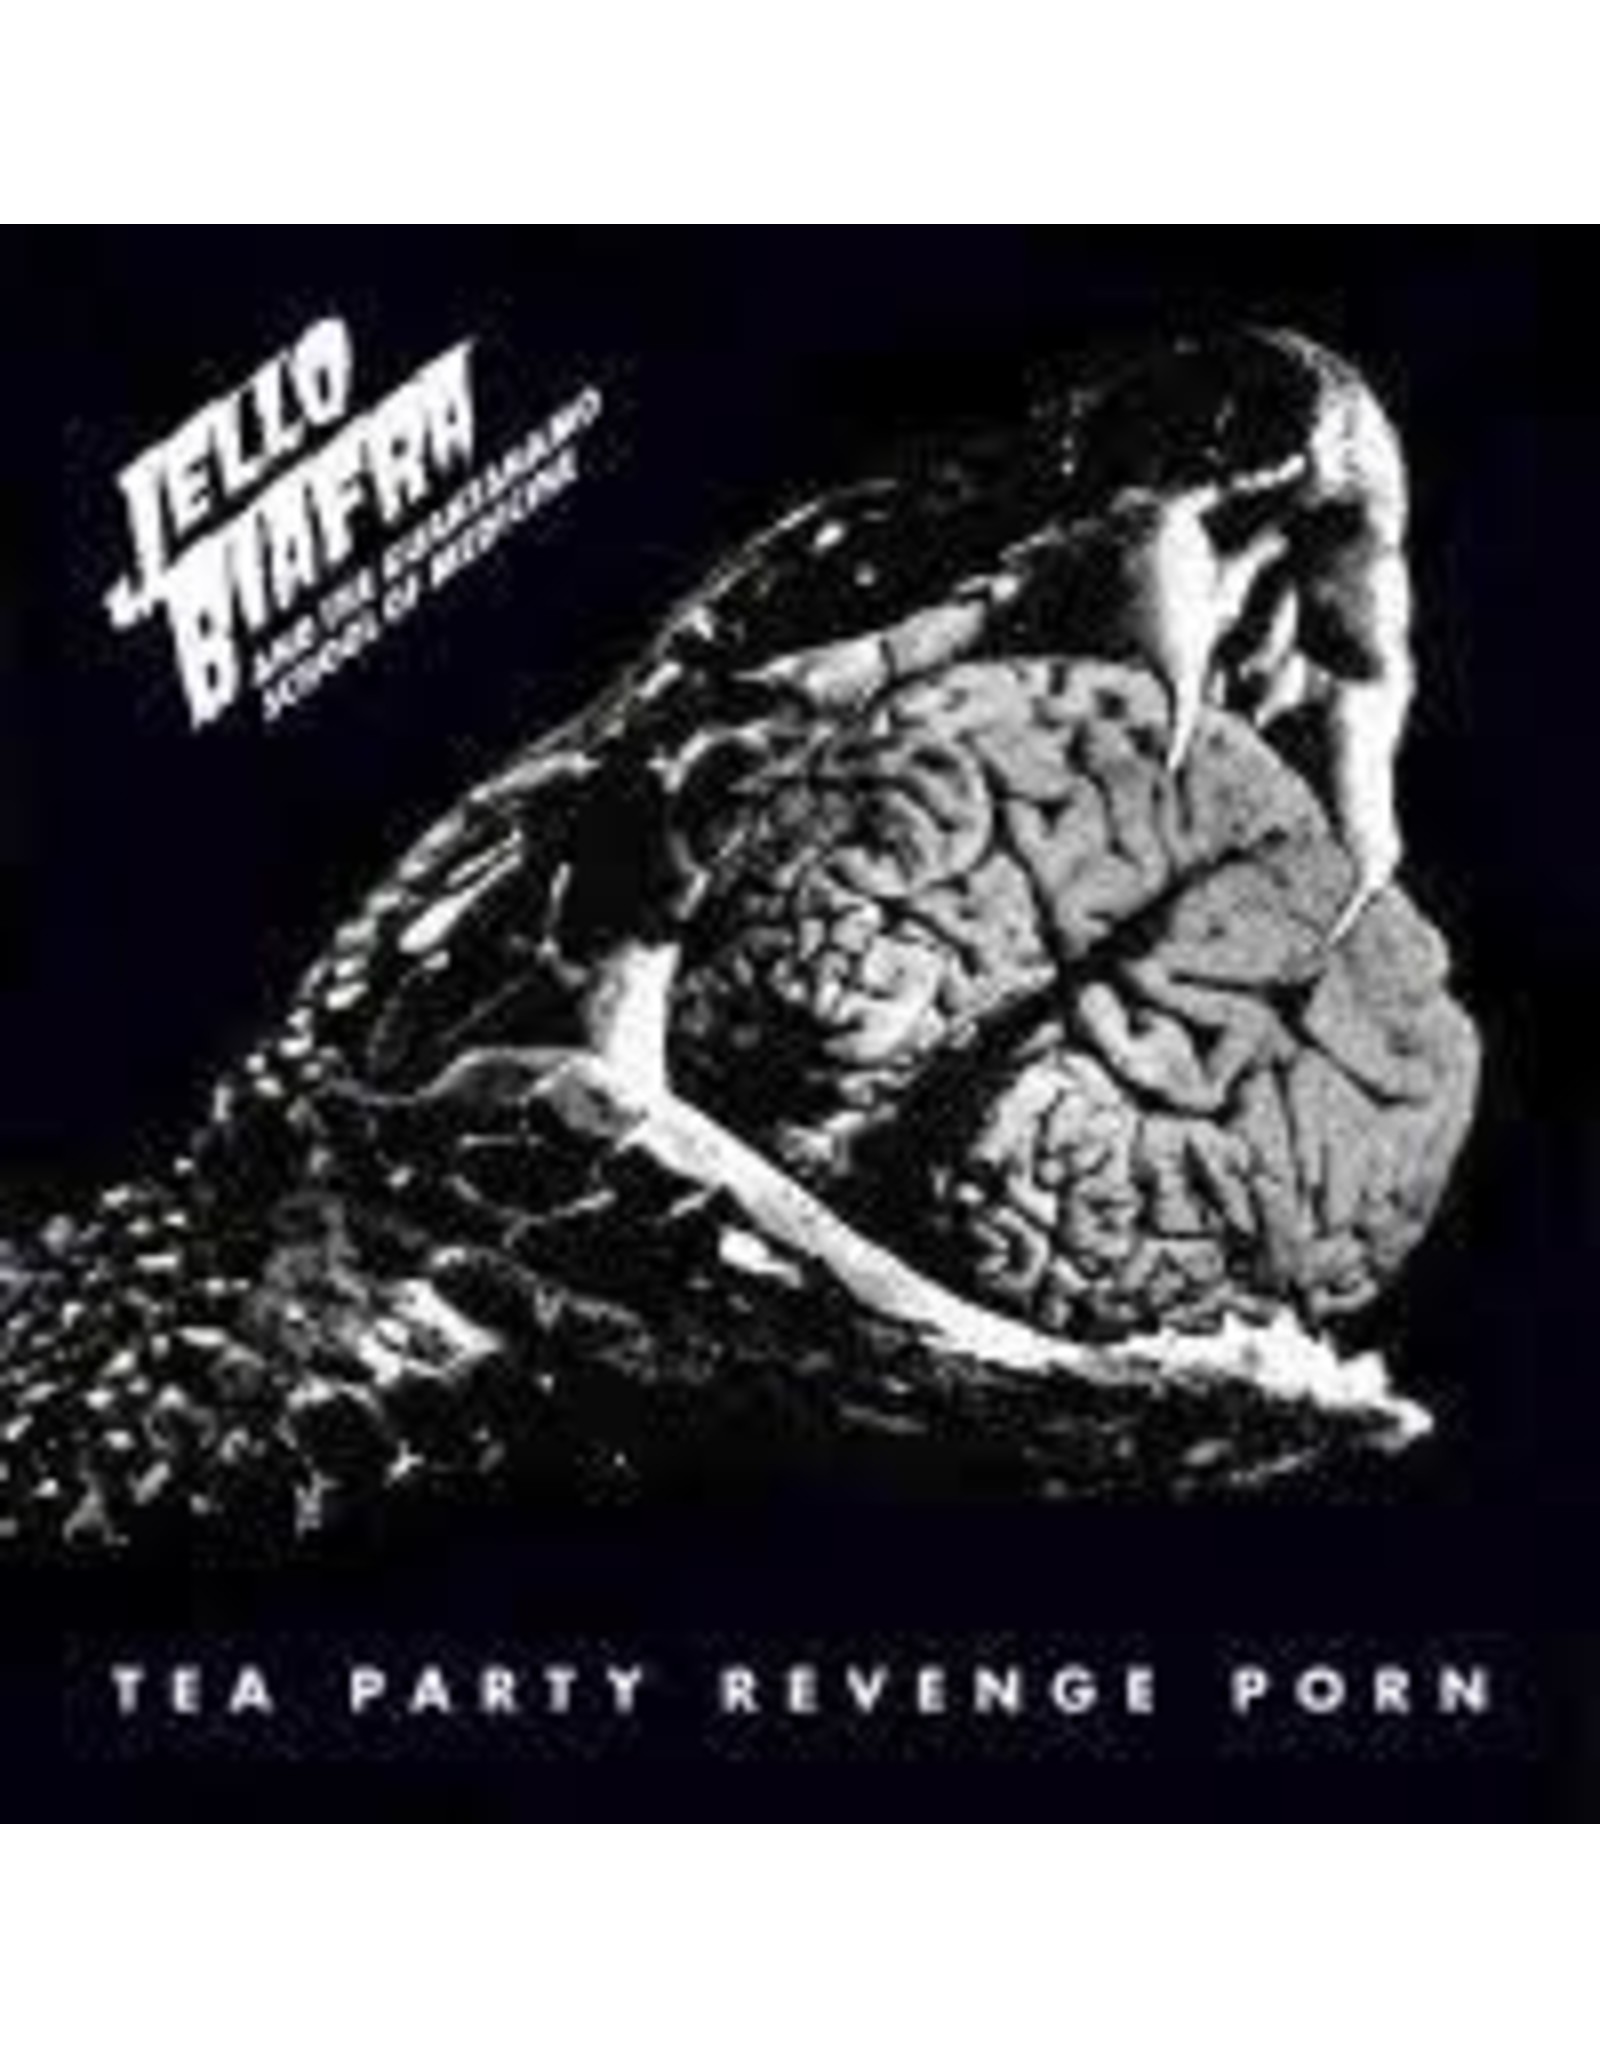 Biafra, Jello - Tea Party Revenge Porn LP